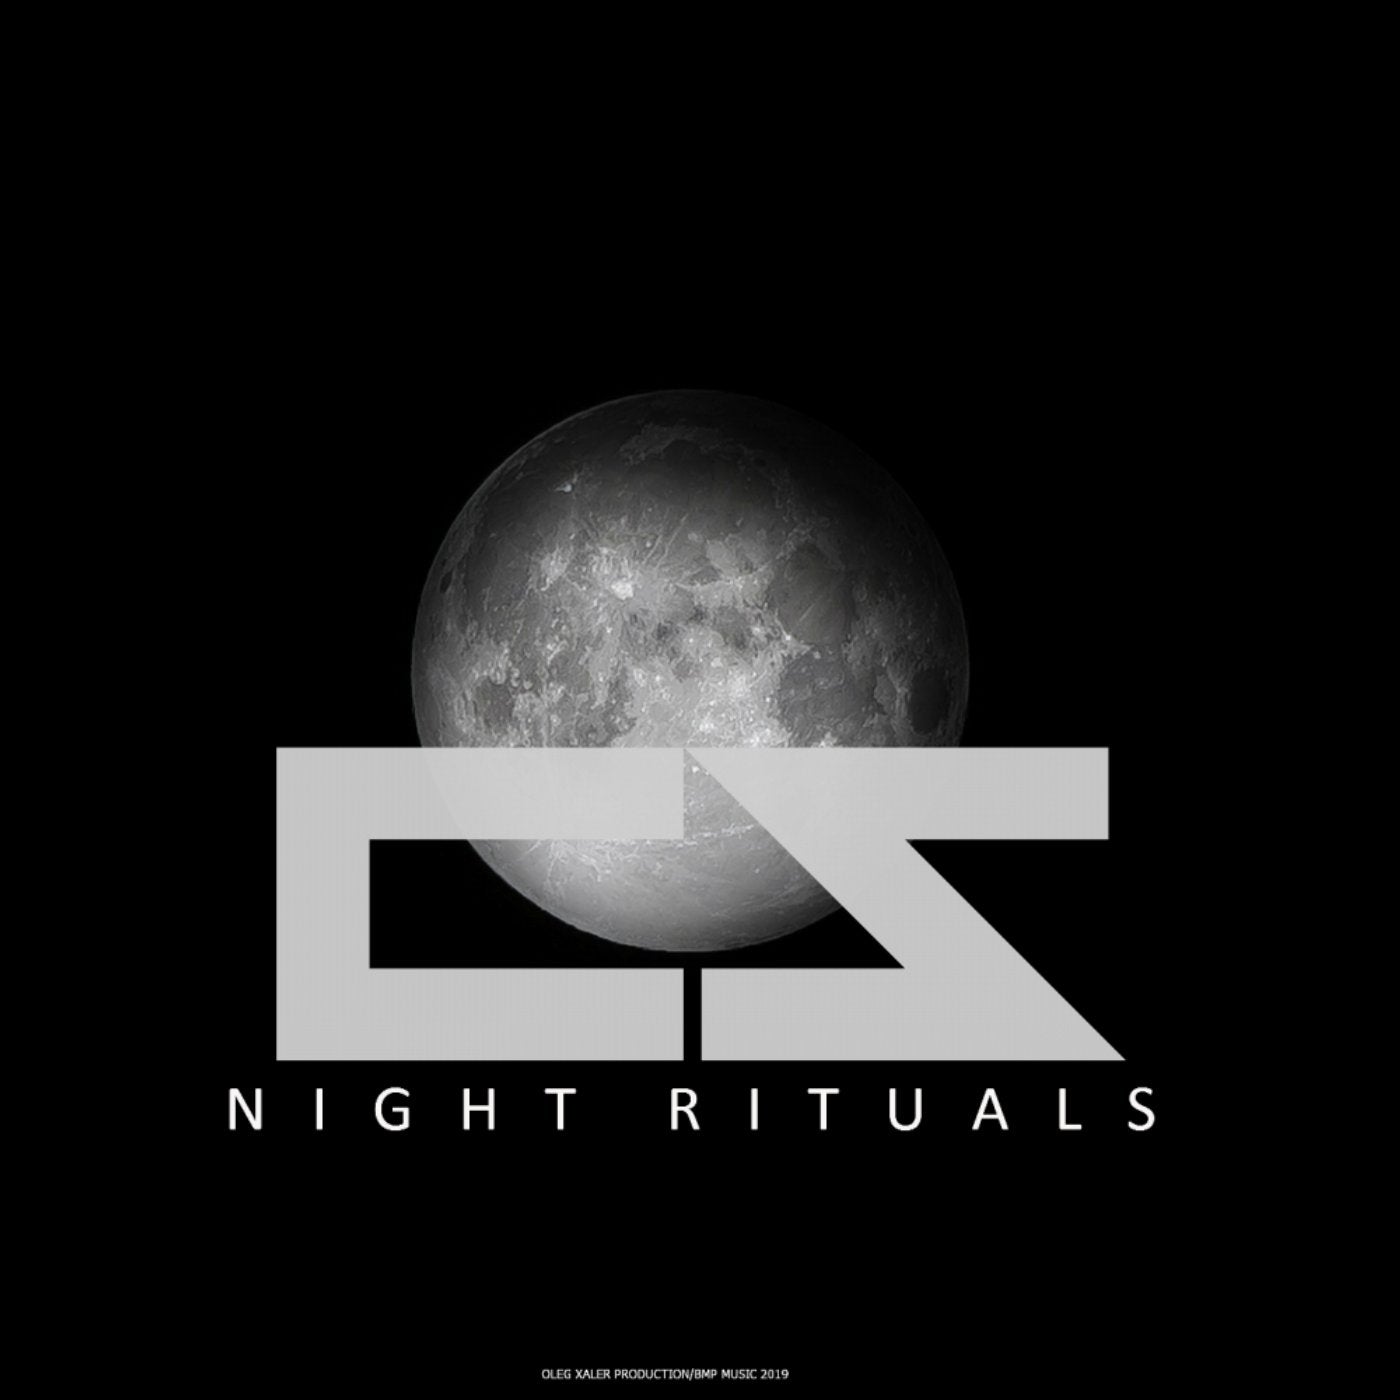 Night Rituals